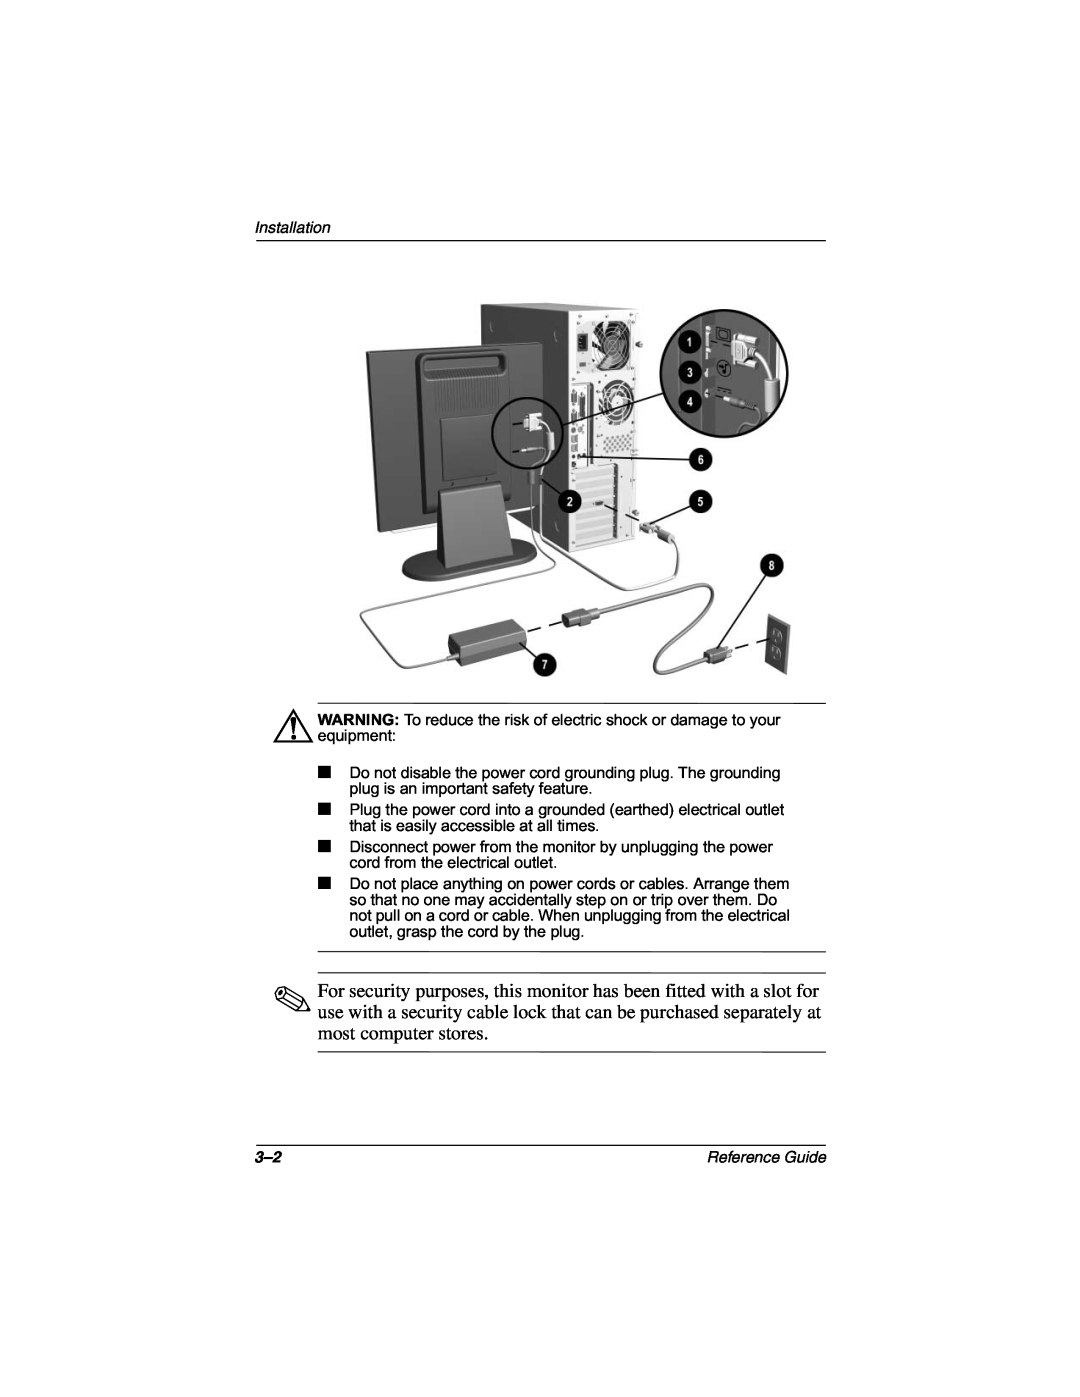 Compaq 5017 manual Installation 